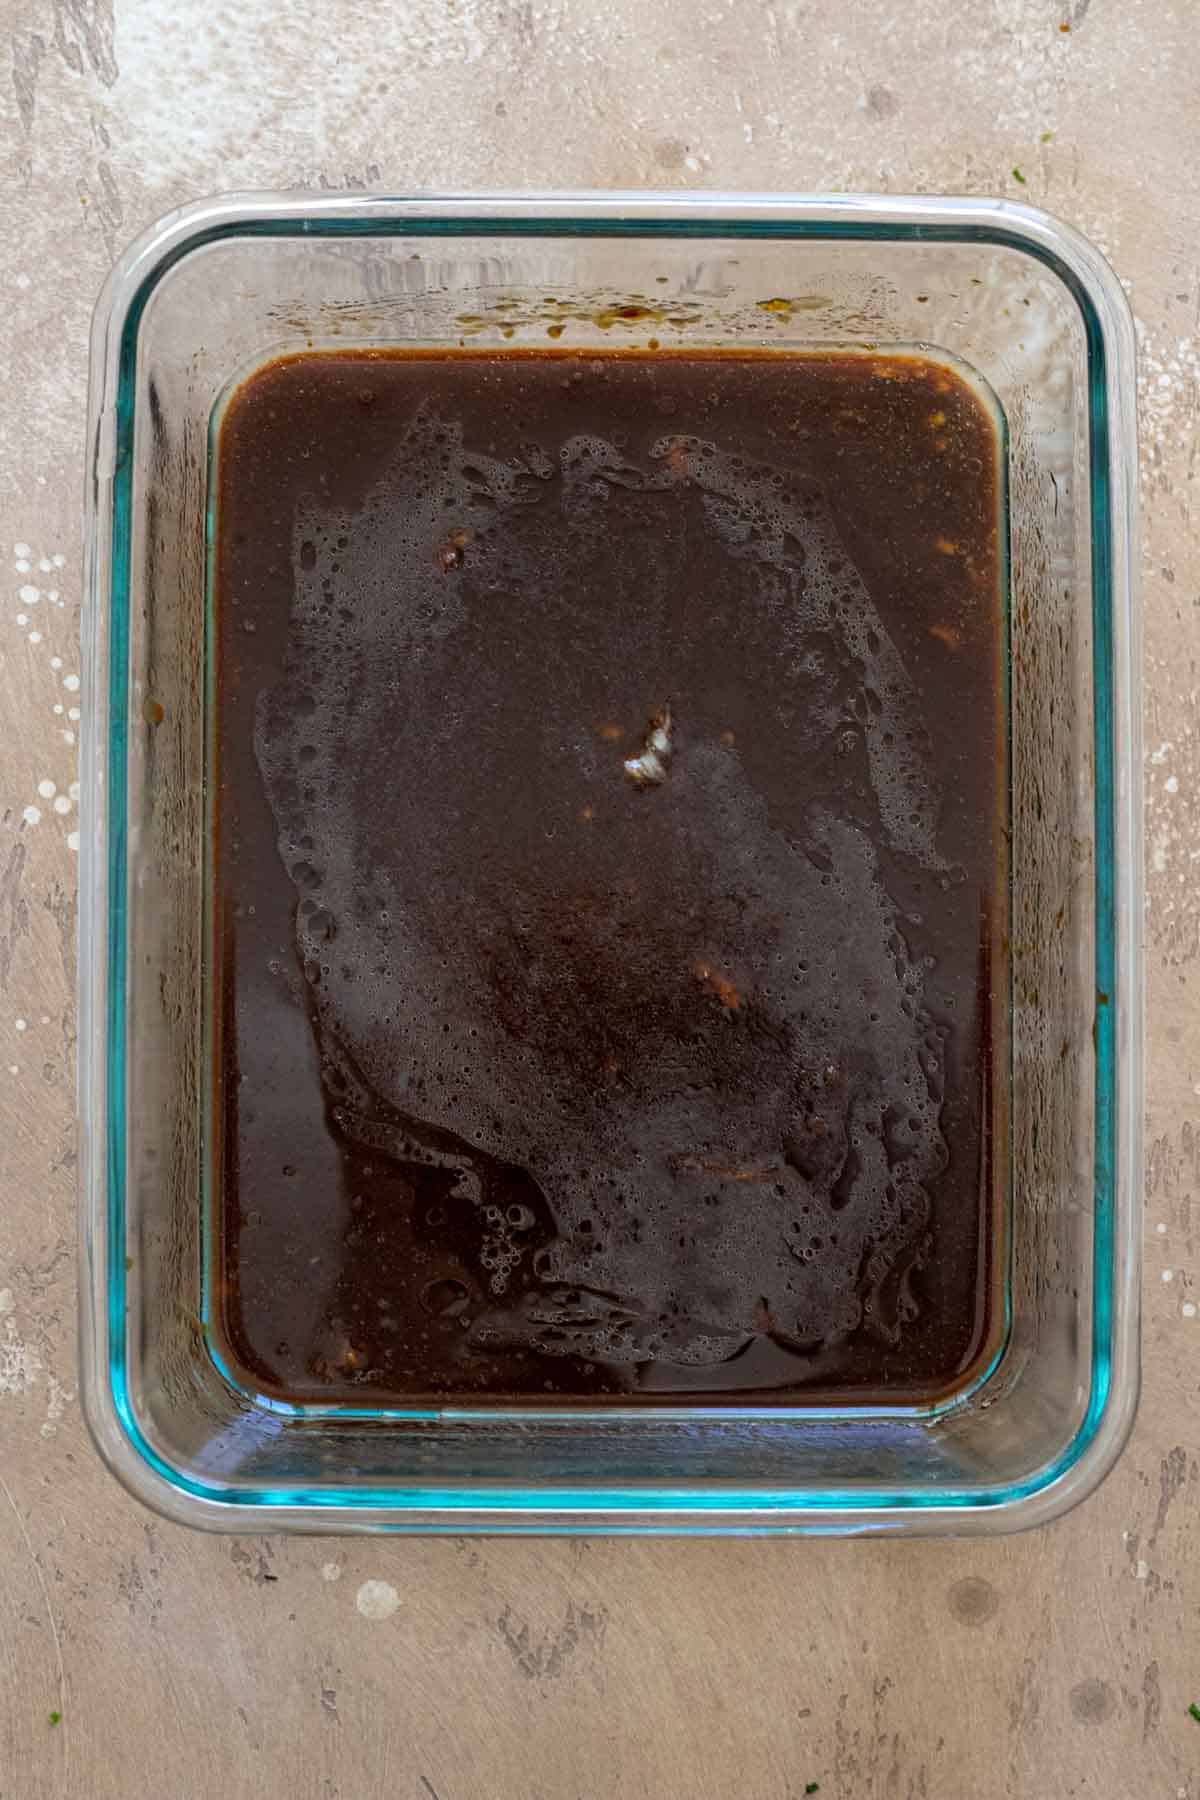 Hoisin sauce, water, garlic, low-sodium tamari mixed together in shallow glass dish.